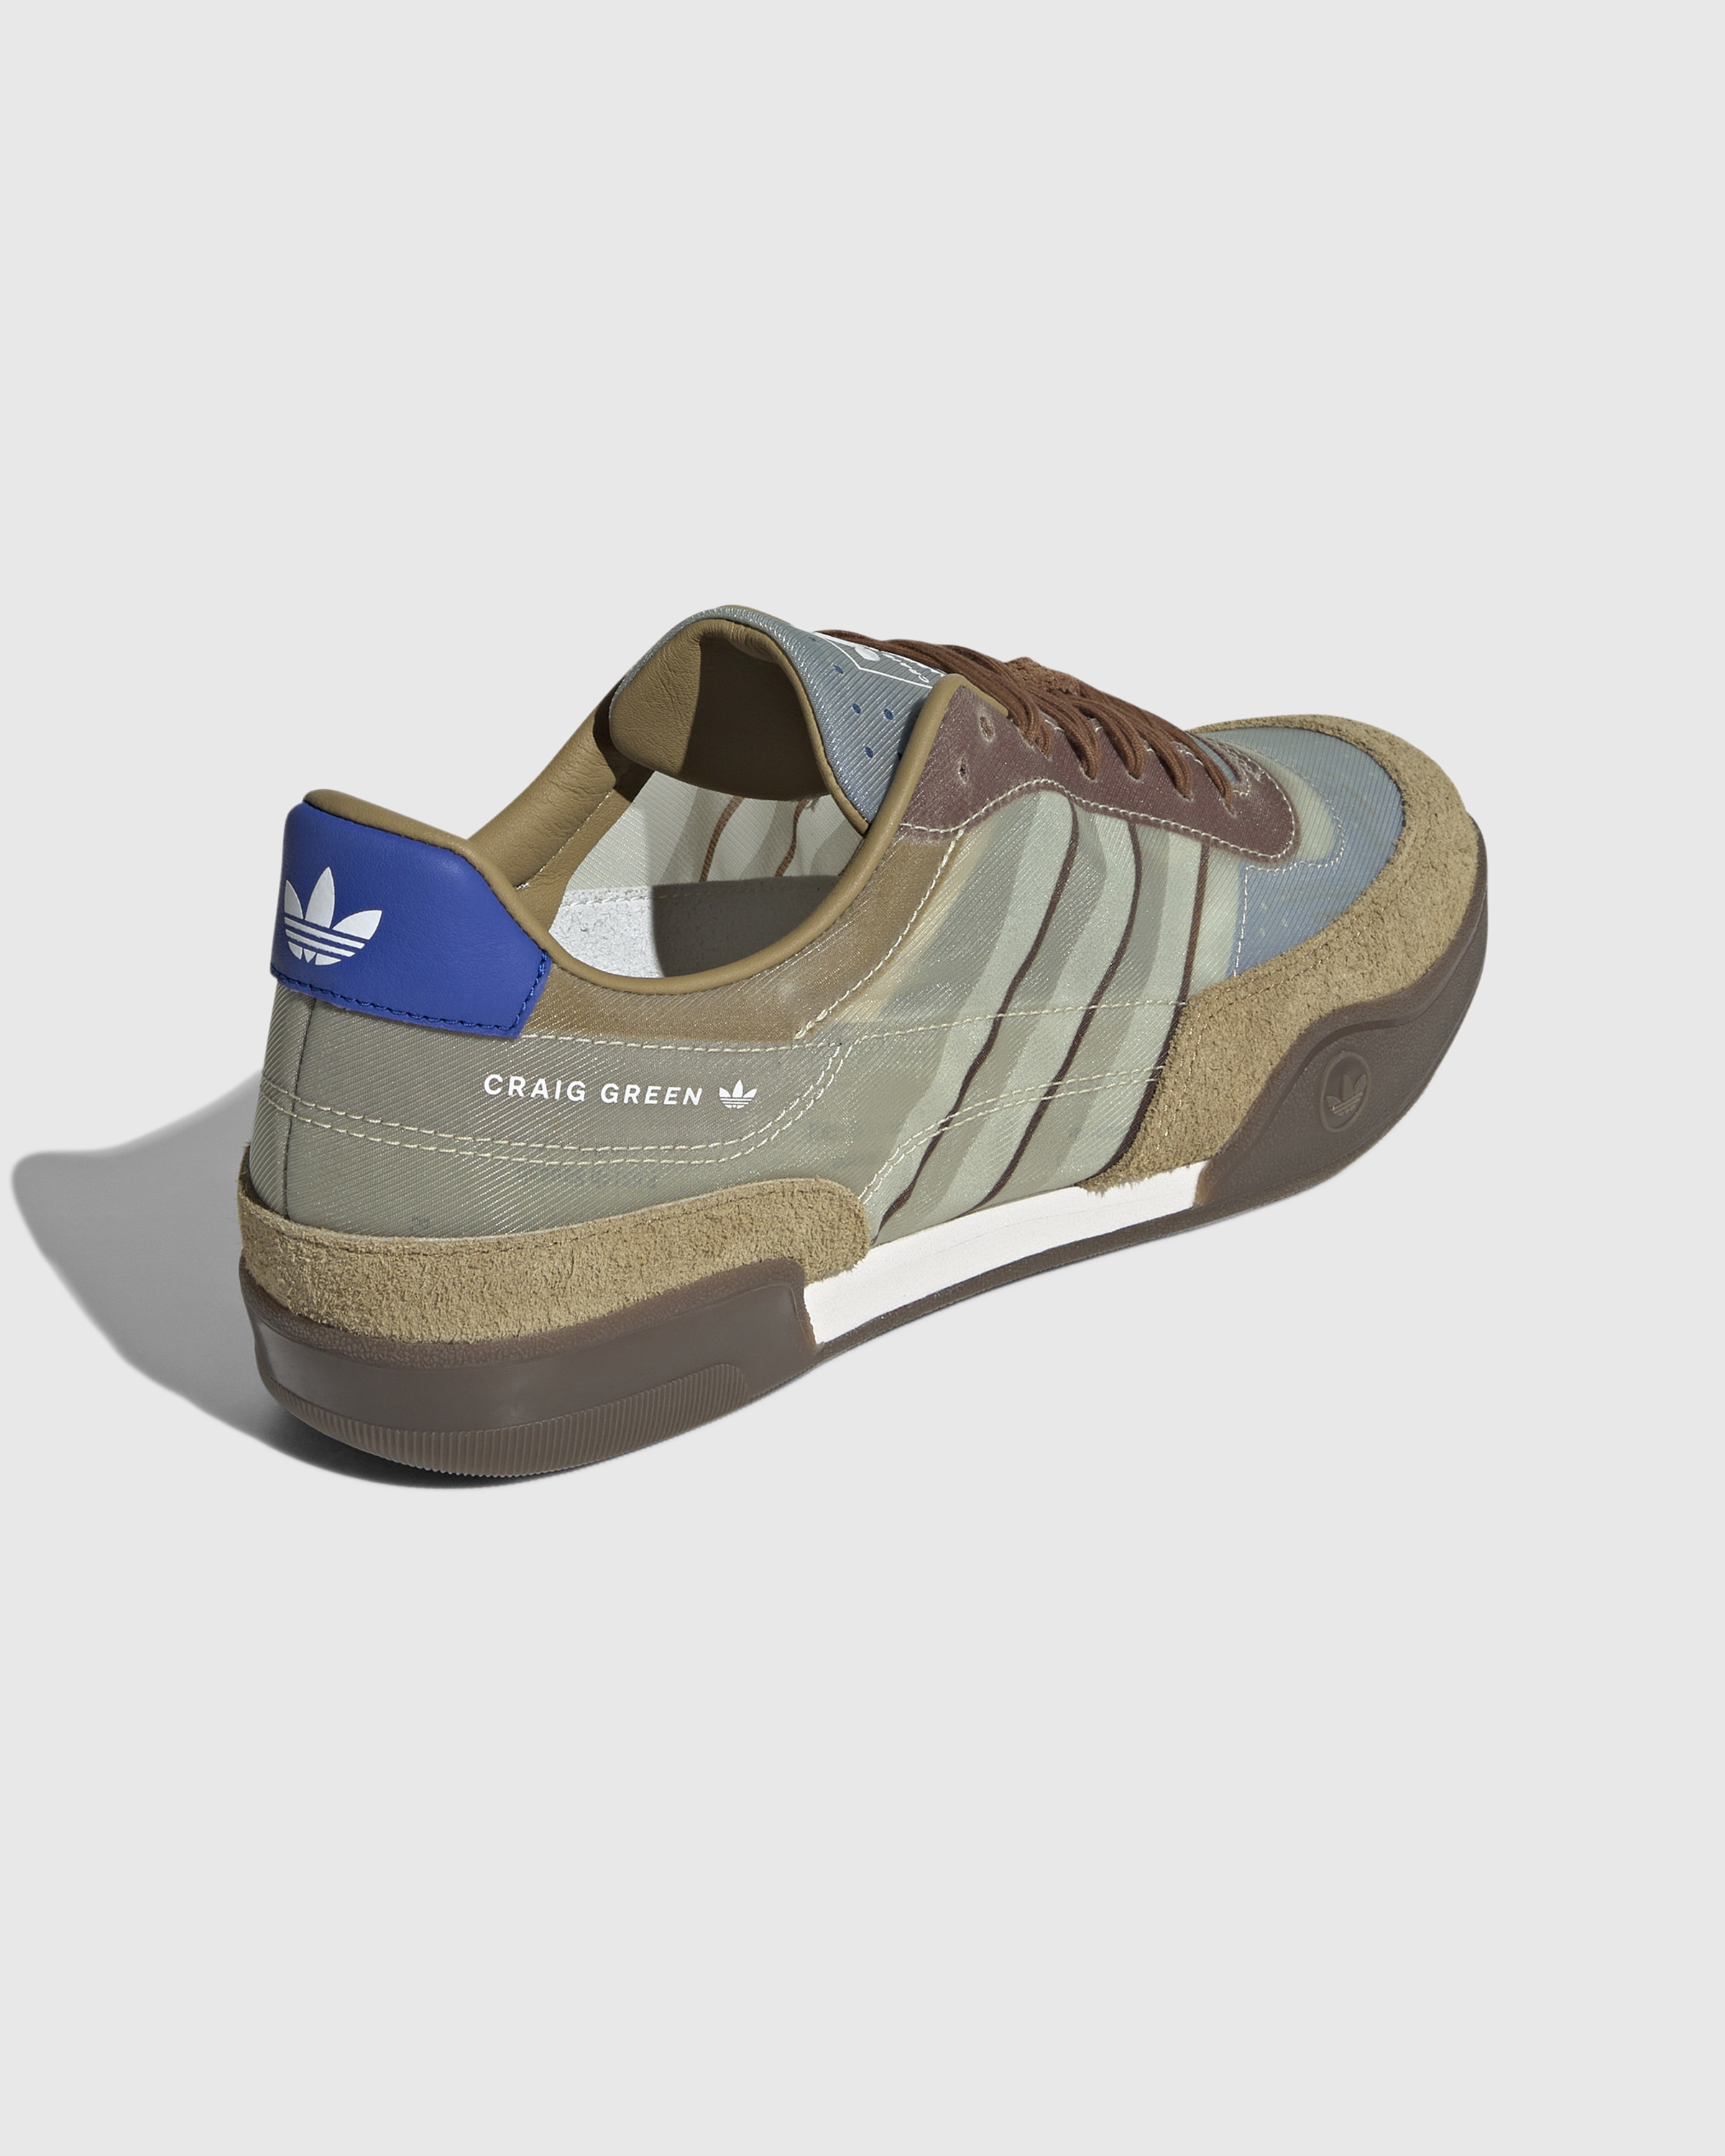 Adidas x Craig Green – Squash Polta Akh Dark Brown/Core Black/Blue - Low Top Sneakers - Brown - Image 4